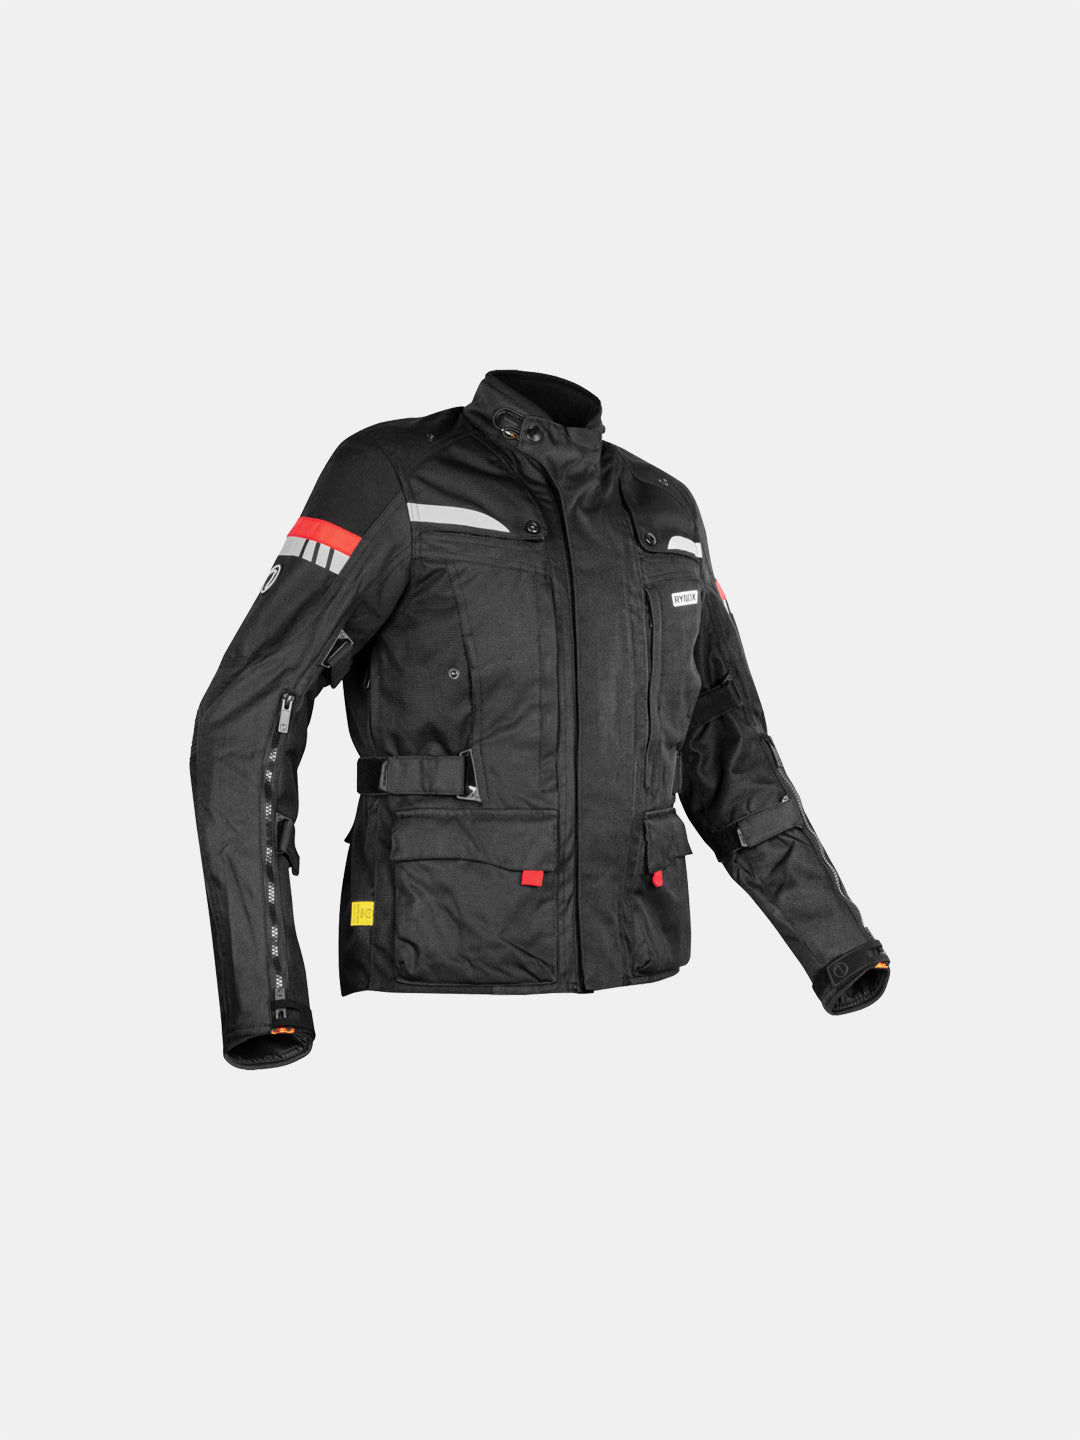 Rynox Stealth Evo 3 Jacket, Motorcycle Racing Jacket, Motorbike Jacket,  Bike Jackets, Riding Safety Jacket, Riding Jackets - LRL Motors Private  Limited, Kochi | ID: 2852426154273